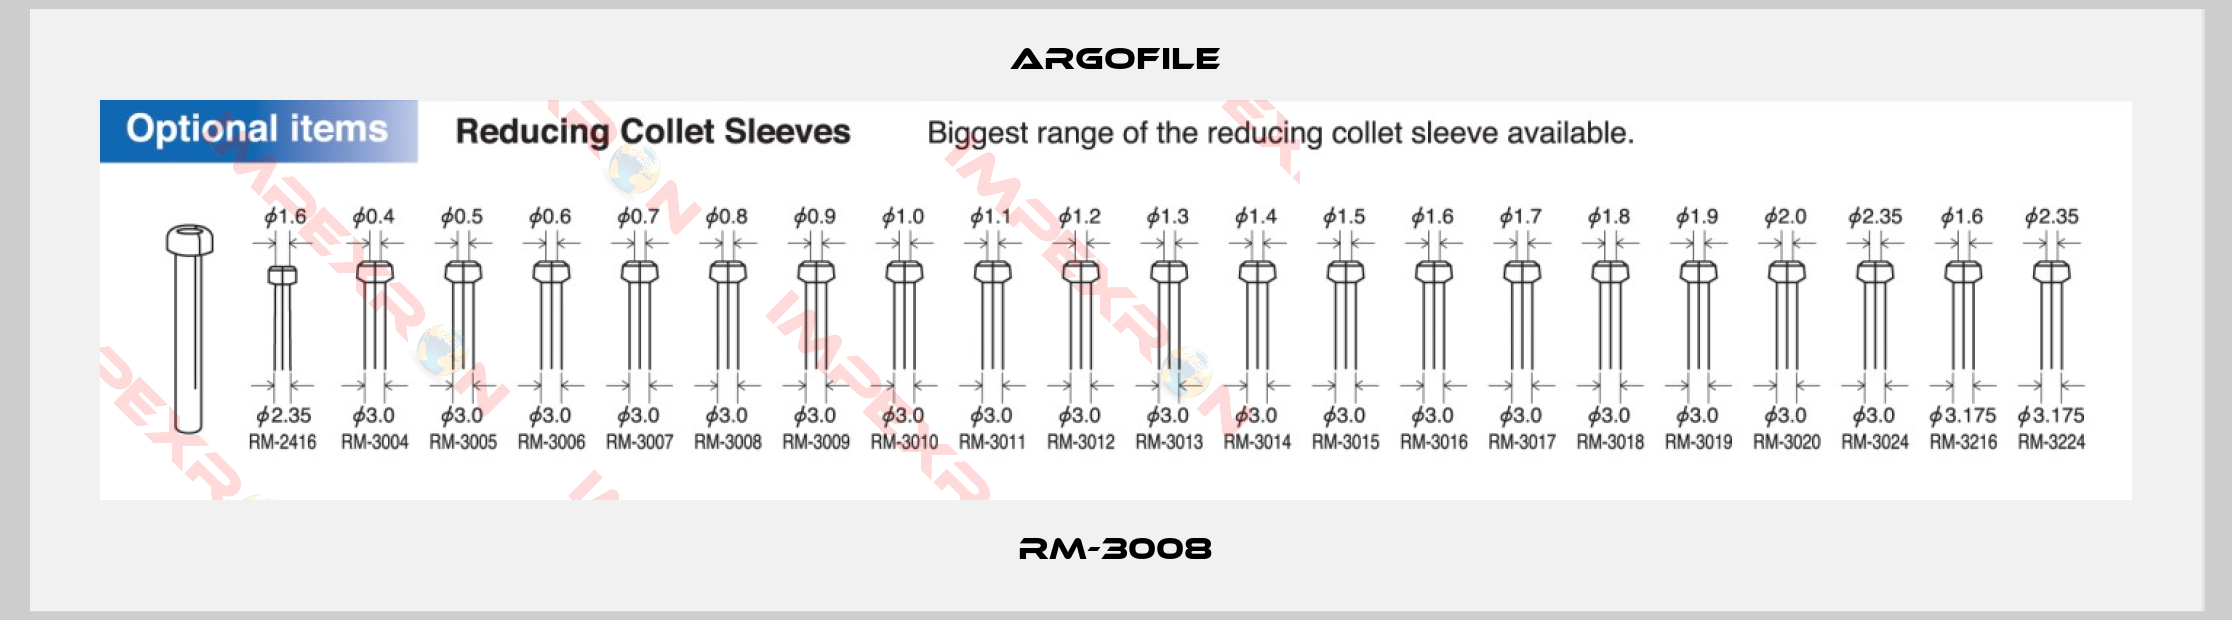 Argofile-RM-3008